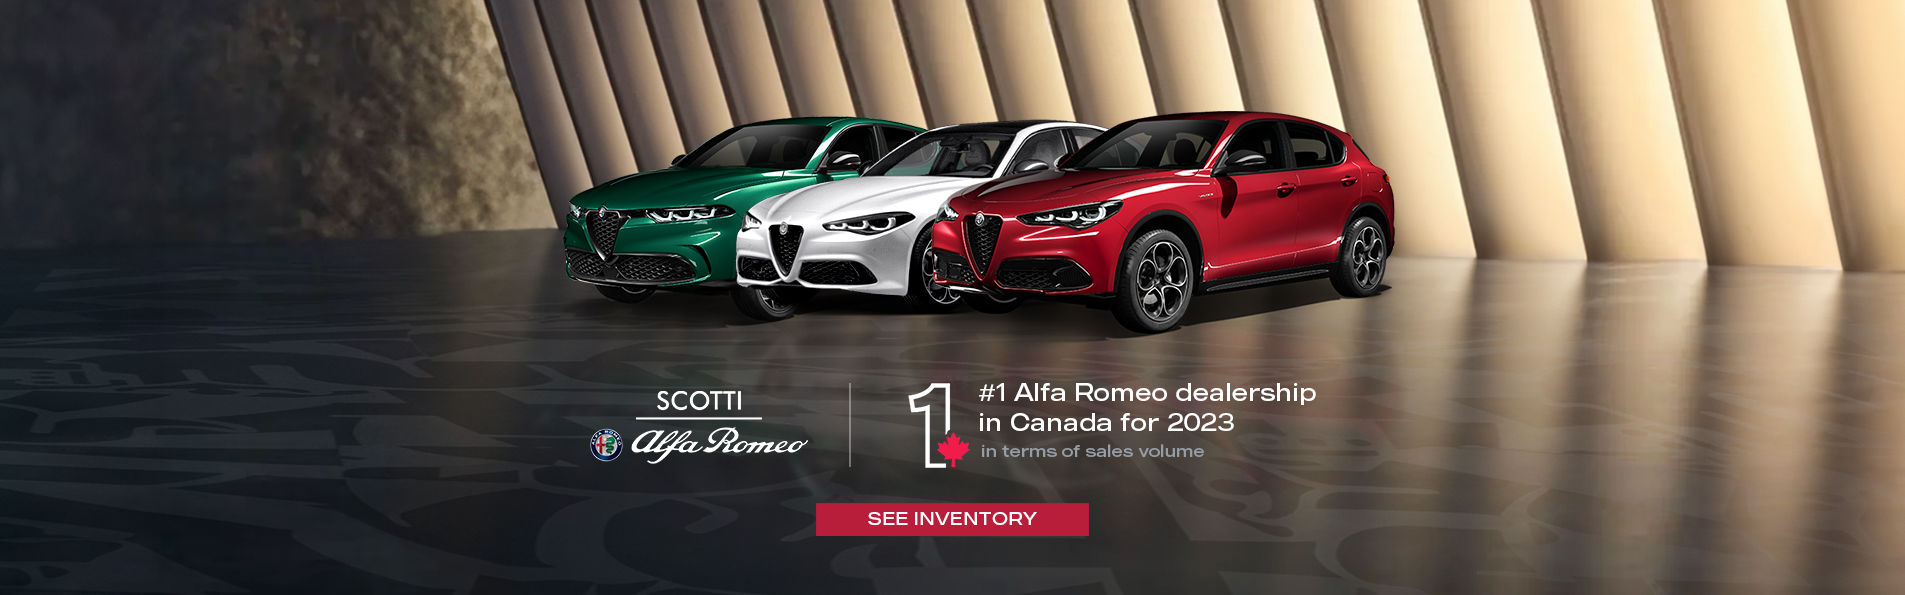 #1 Alfa Romeo dealership in Canada